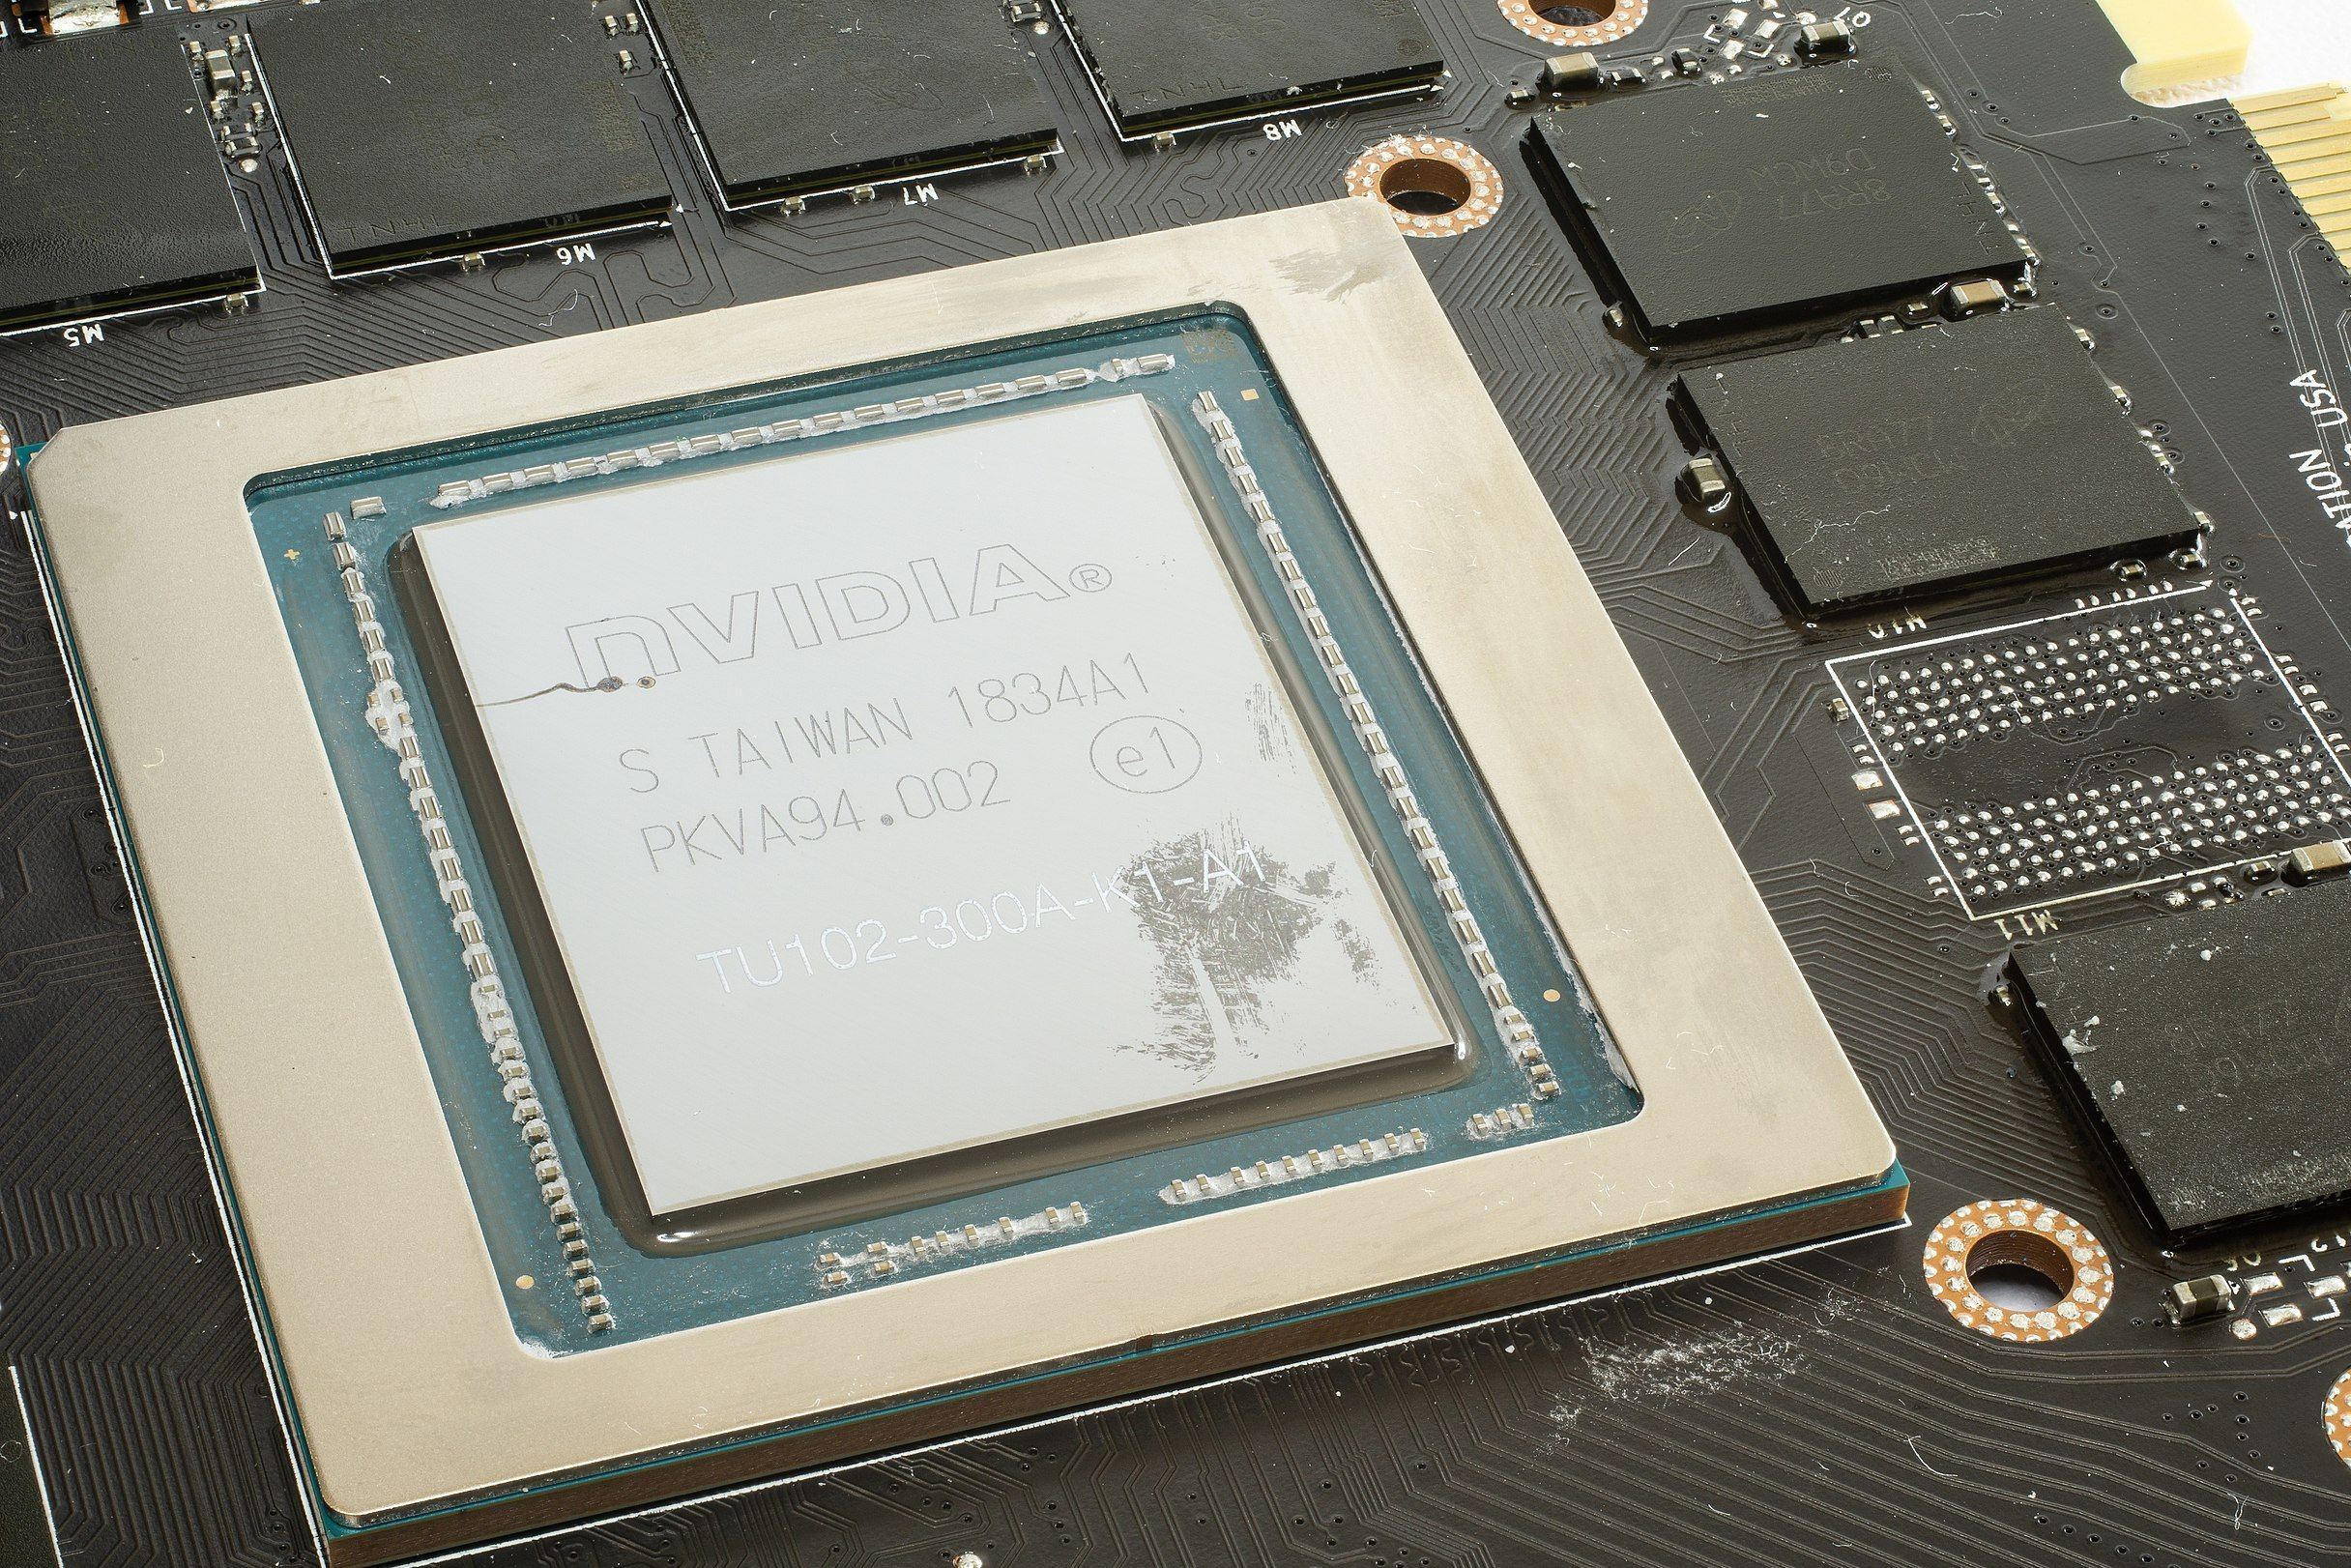 GPU die and memory vram